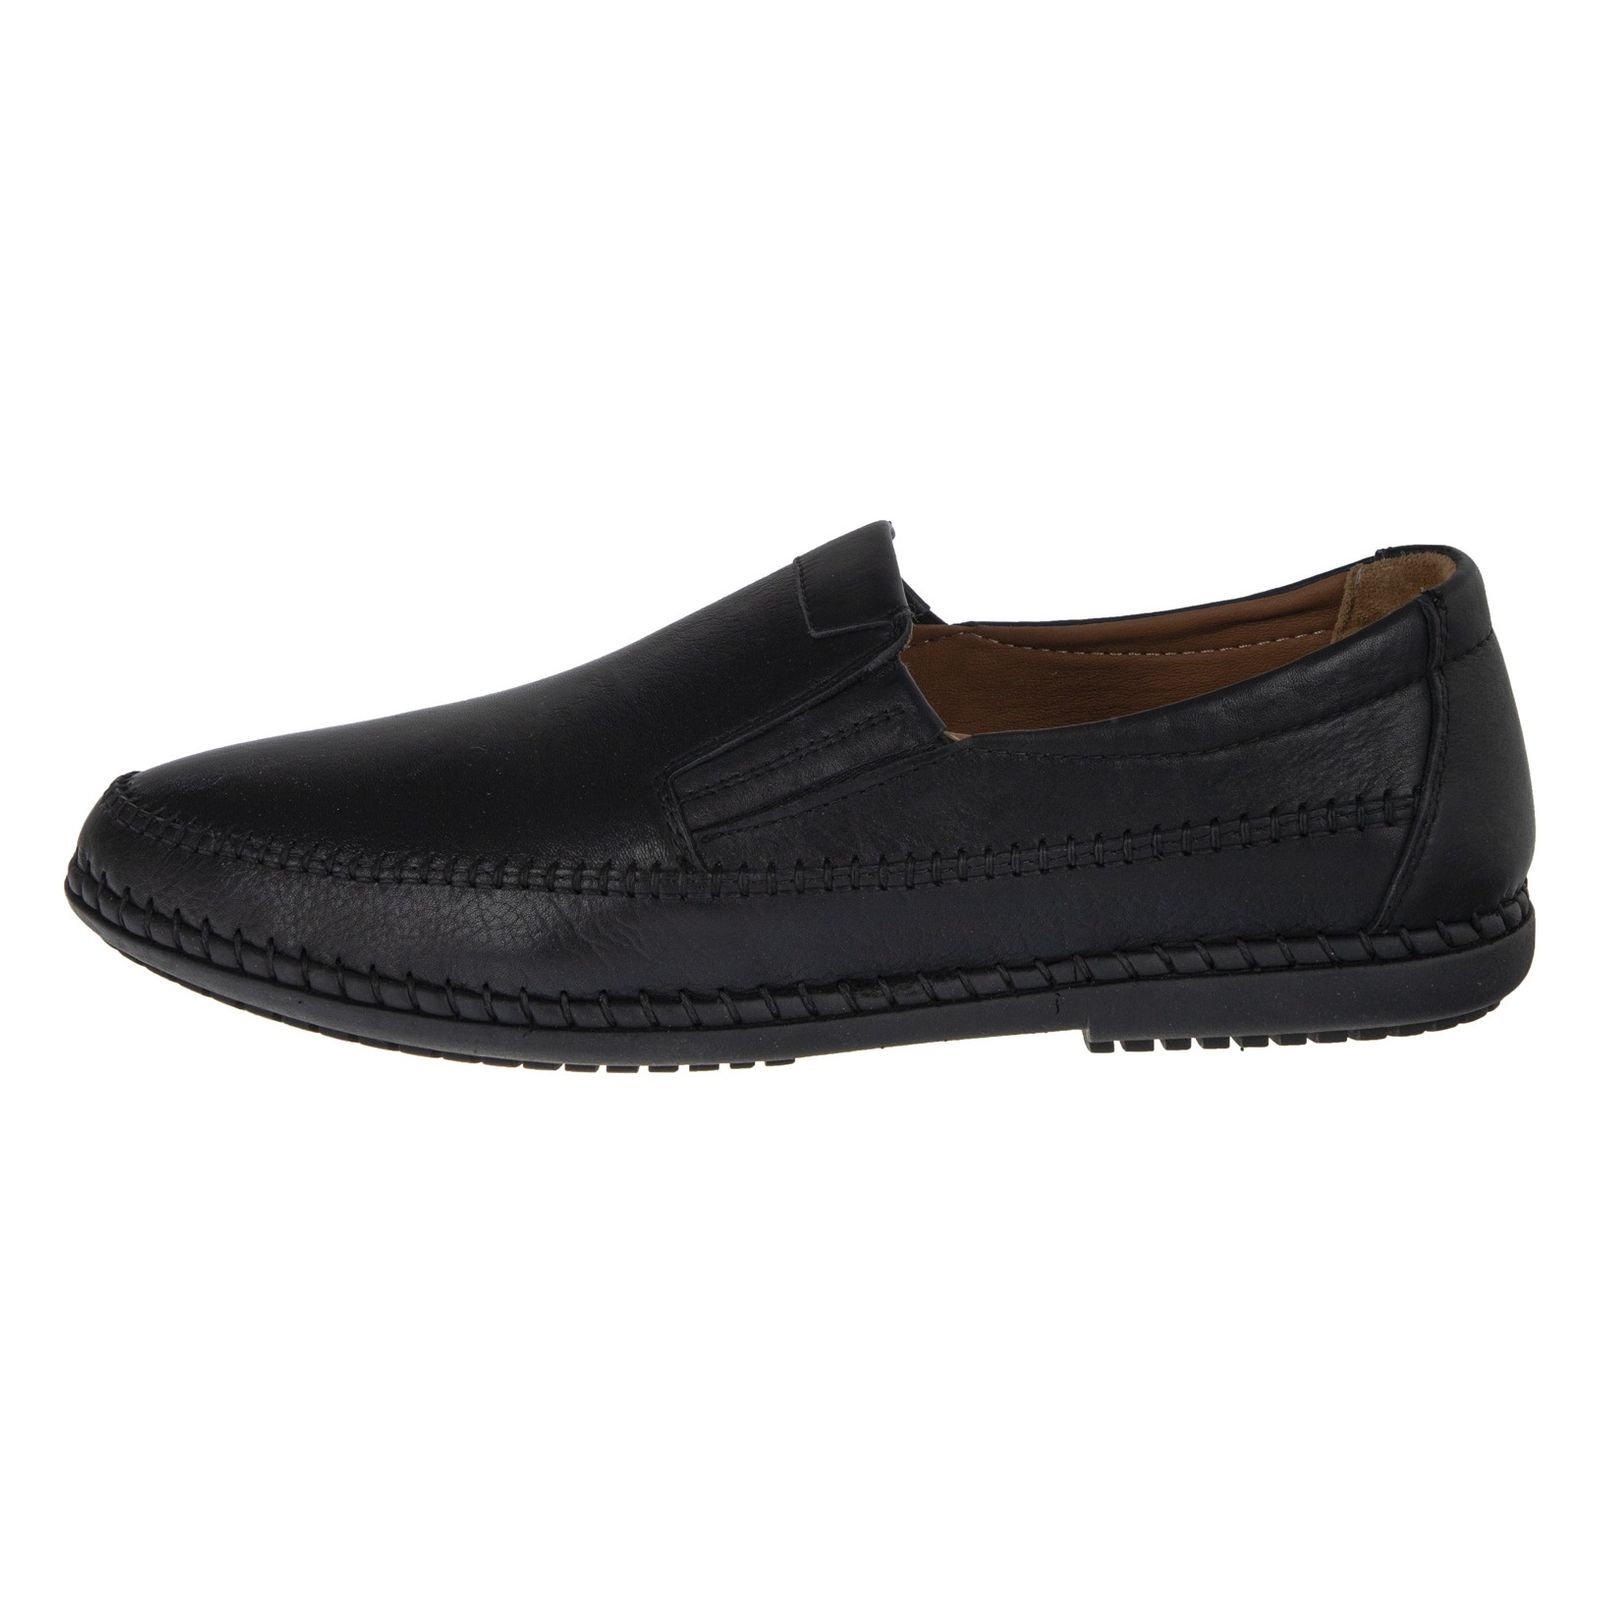 کفش روزمره مردانه پولاریس مدل 100256231-124 - مشکی - 2